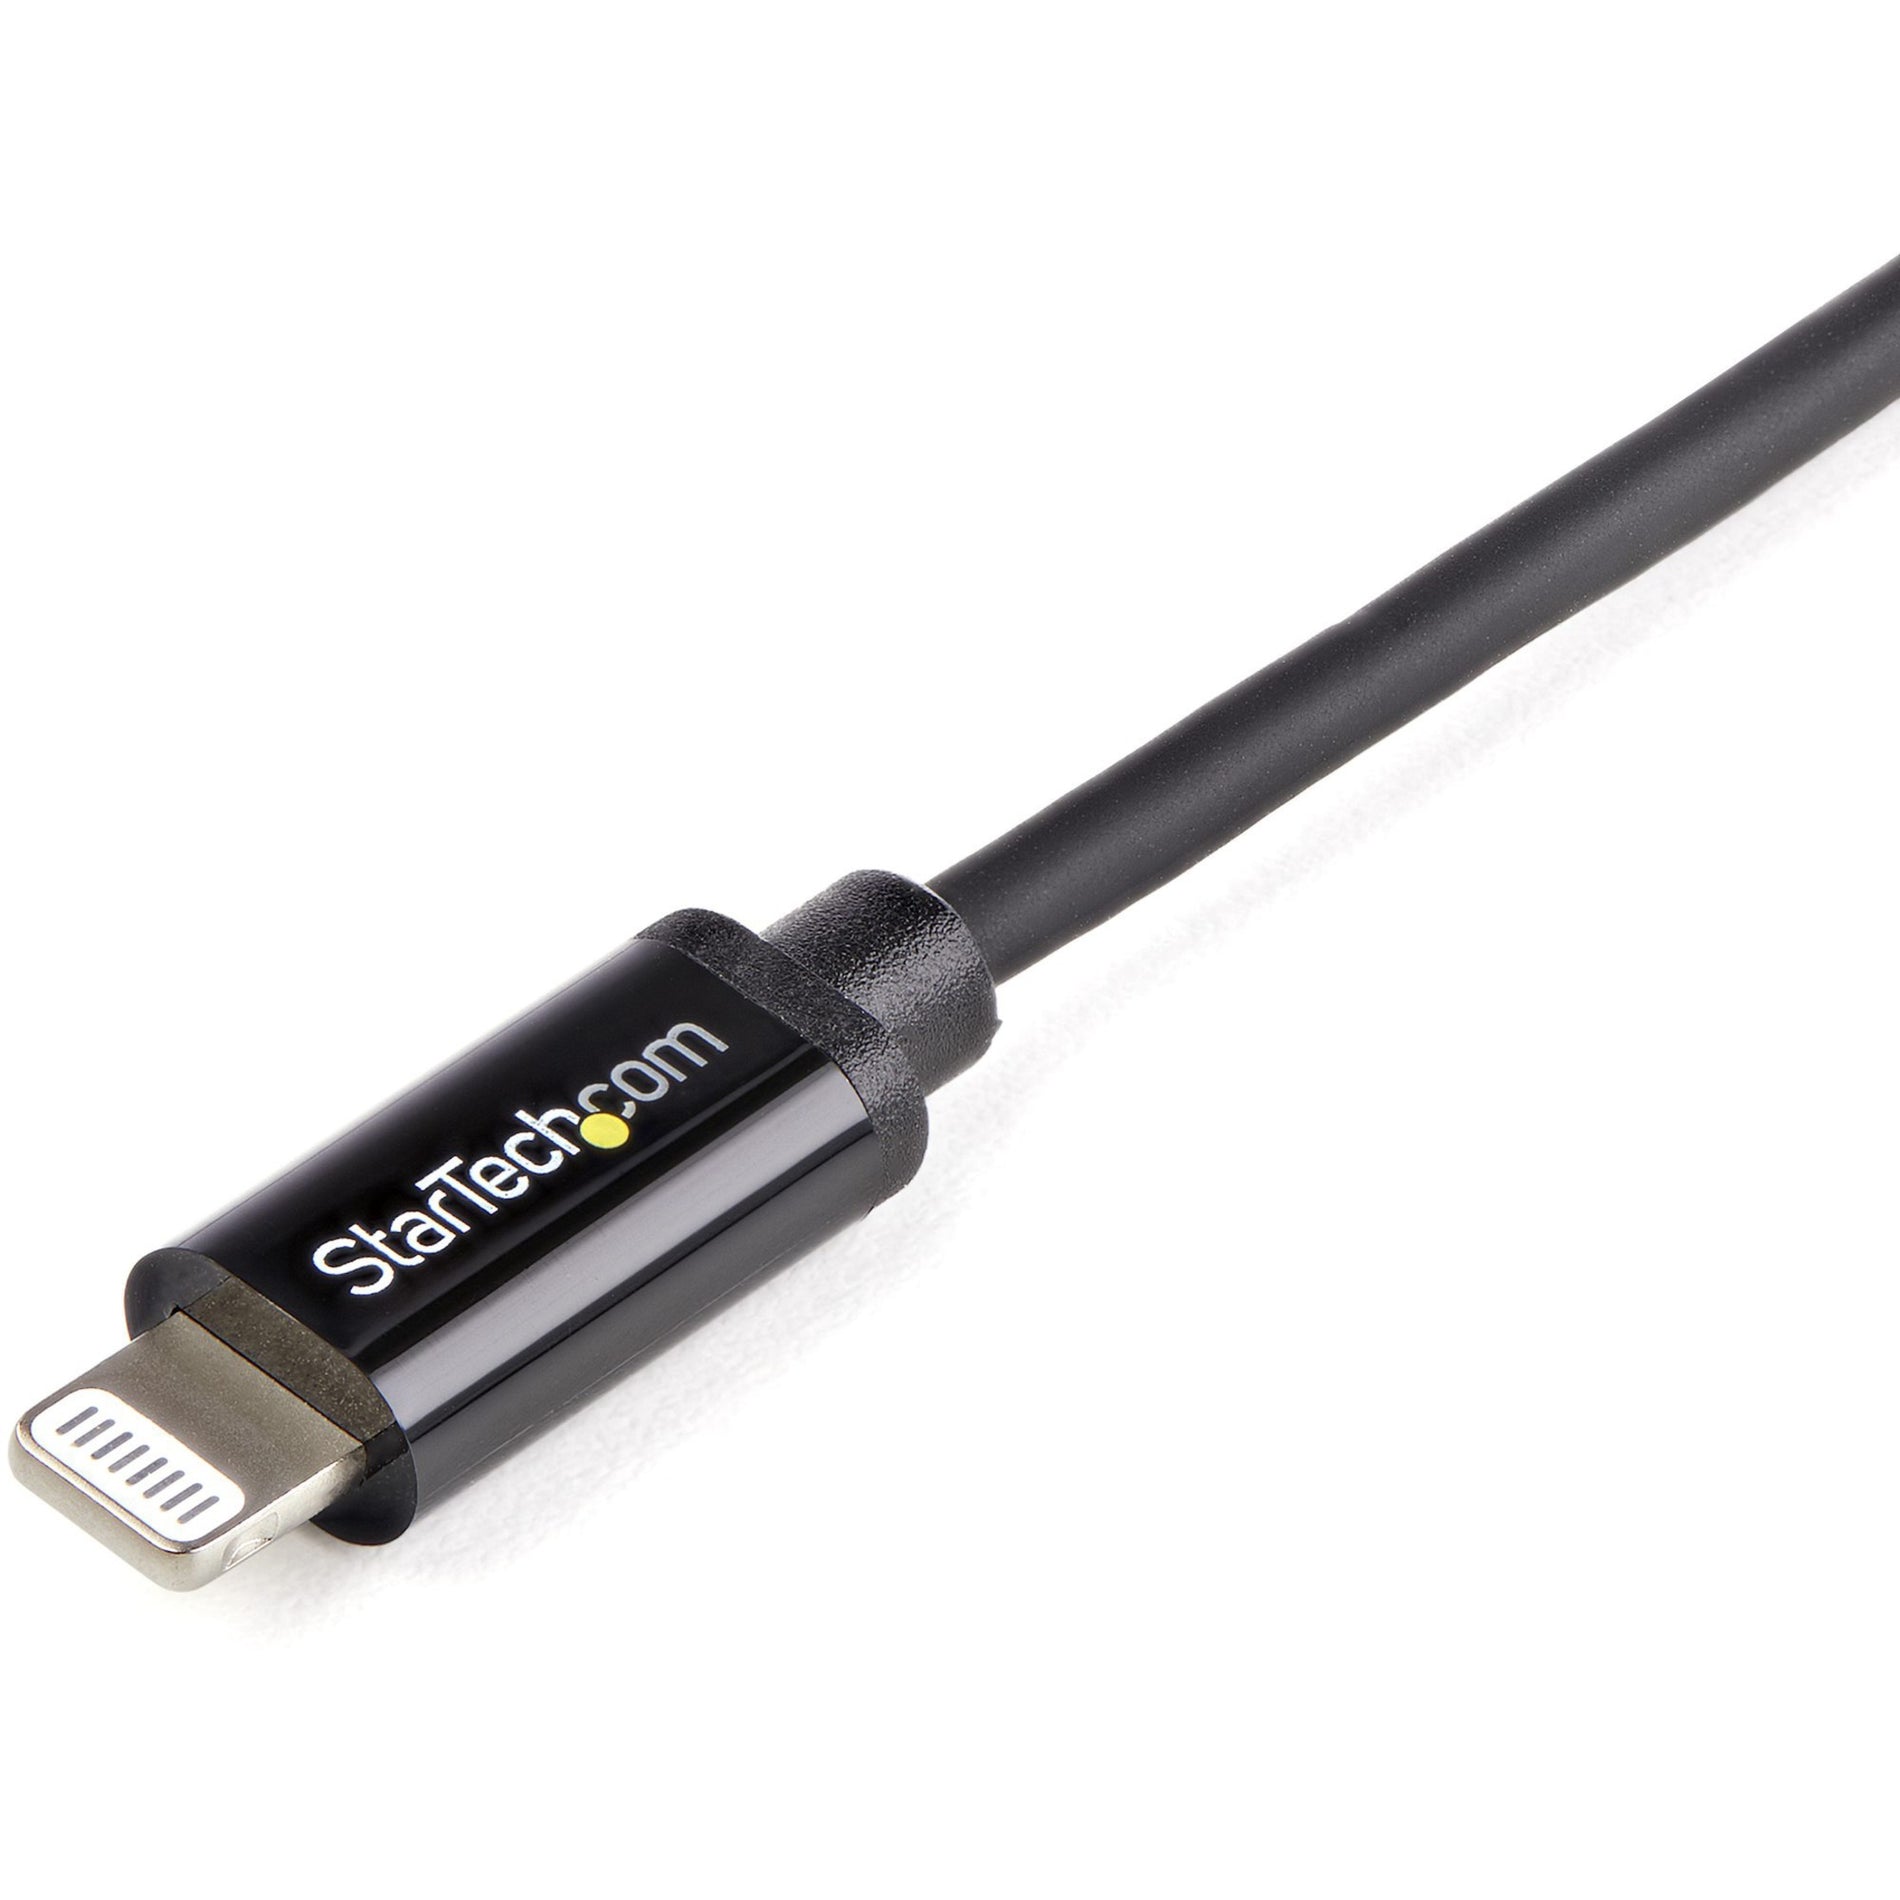 StarTech.com USBLT2MB Sync/Charge Lightning/USB Data Transfer Cable, 6ft Long, Black